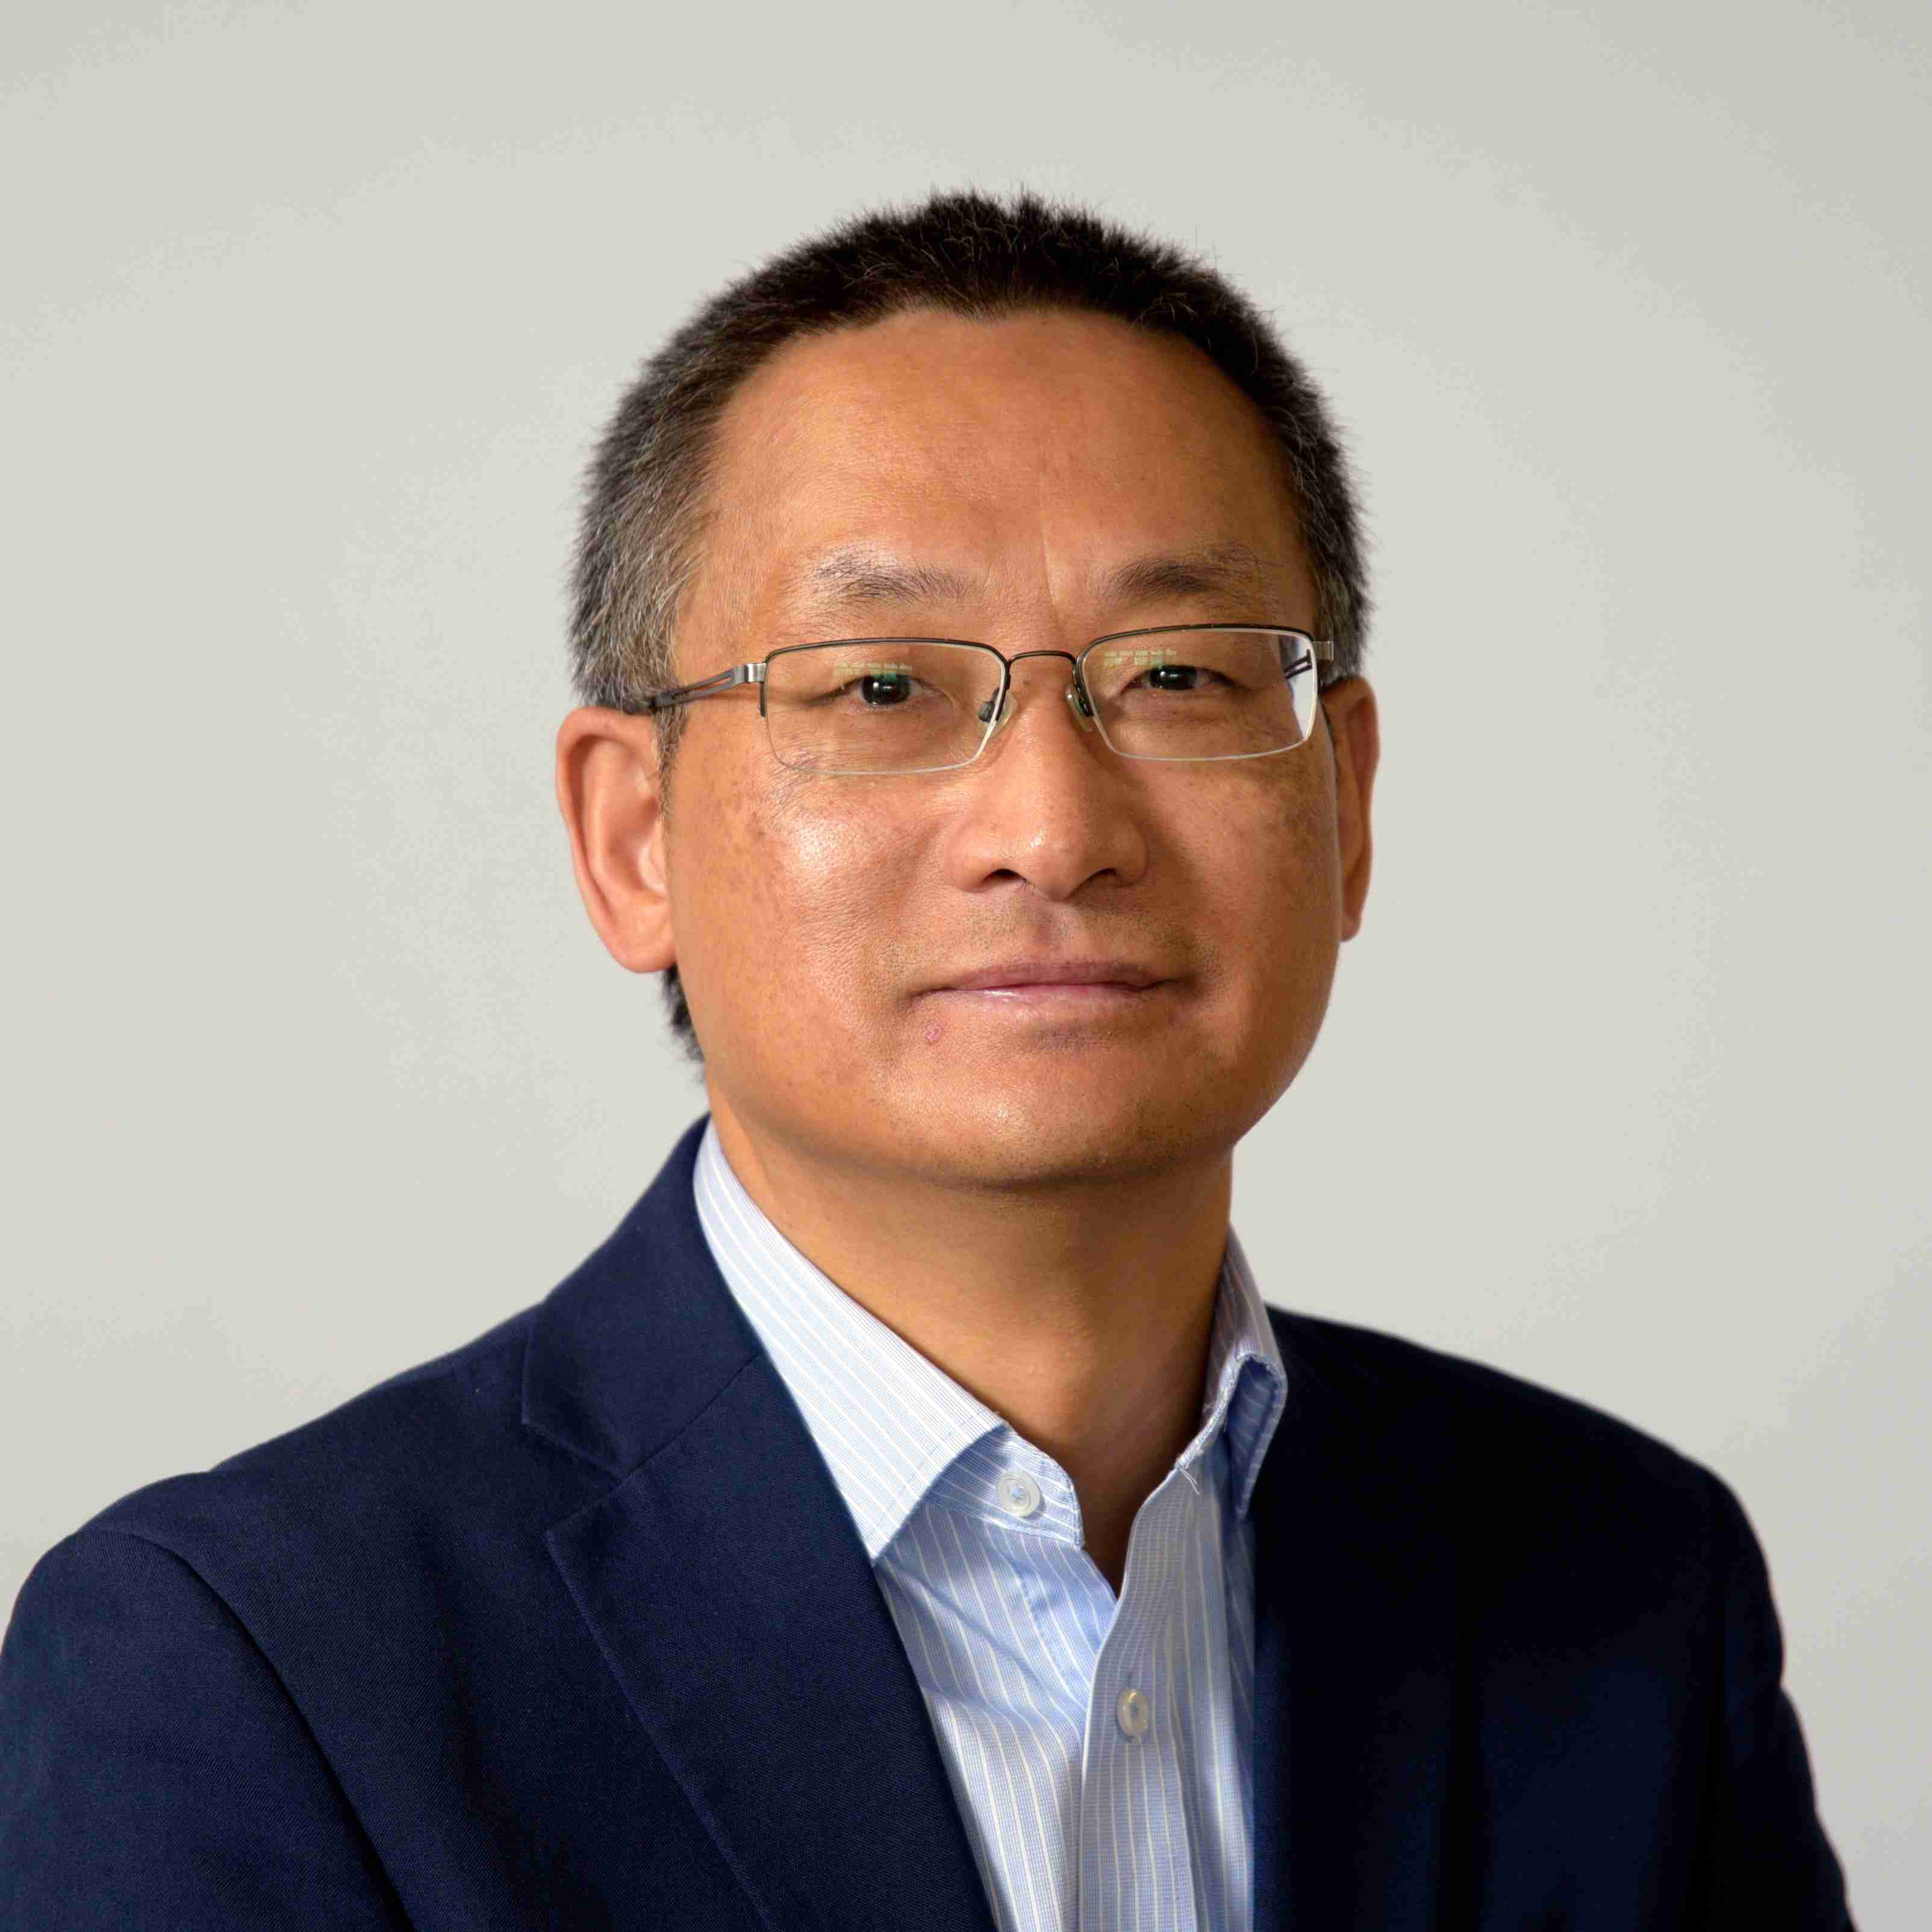 Profile image of Dr Yu Wang